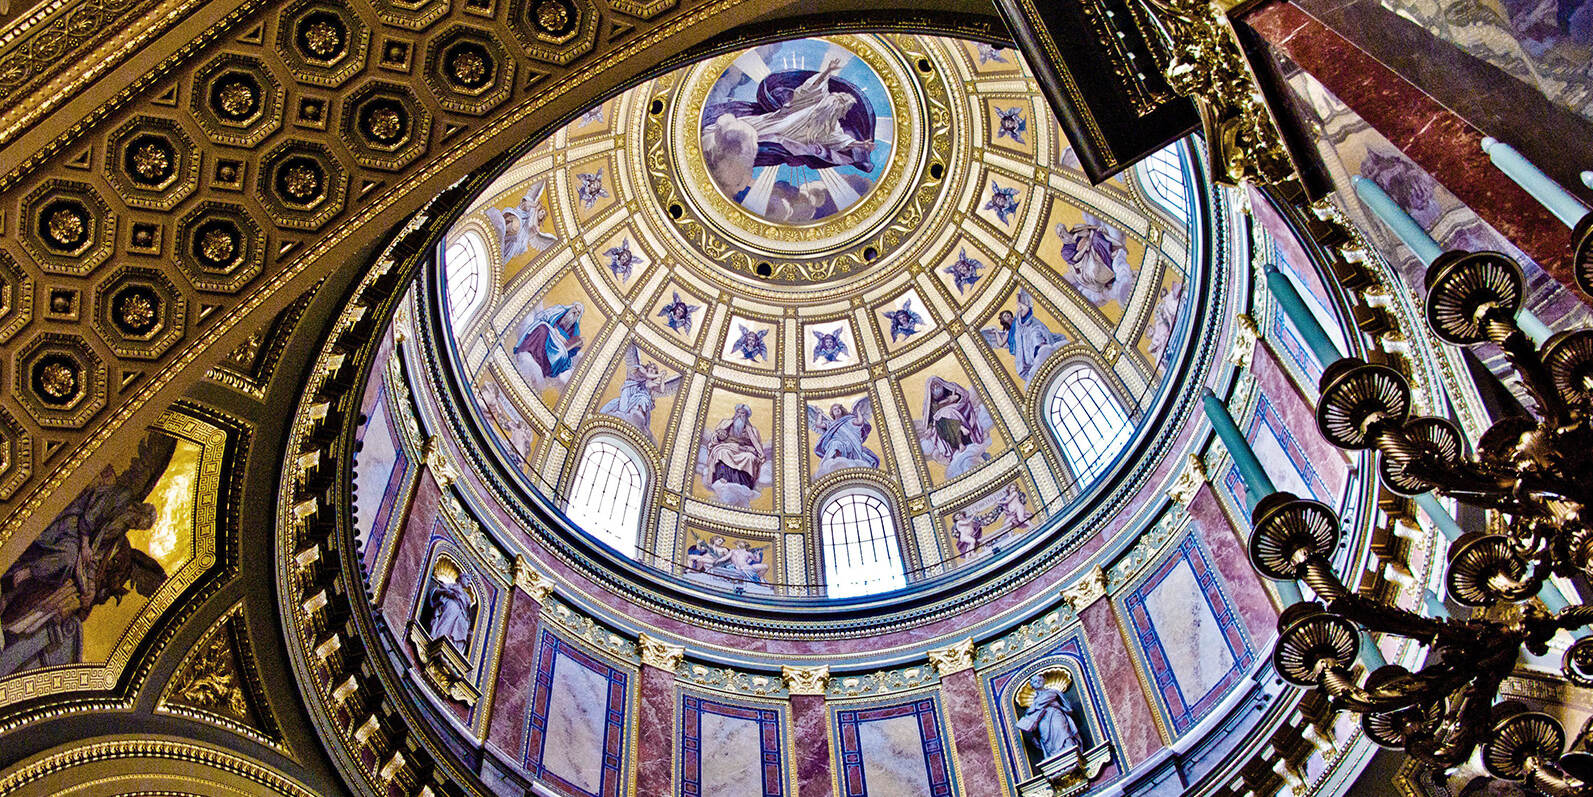 Organ concert at St. Stephen's Basilia - dome of the basilica © Hungaria Koncert ltd.